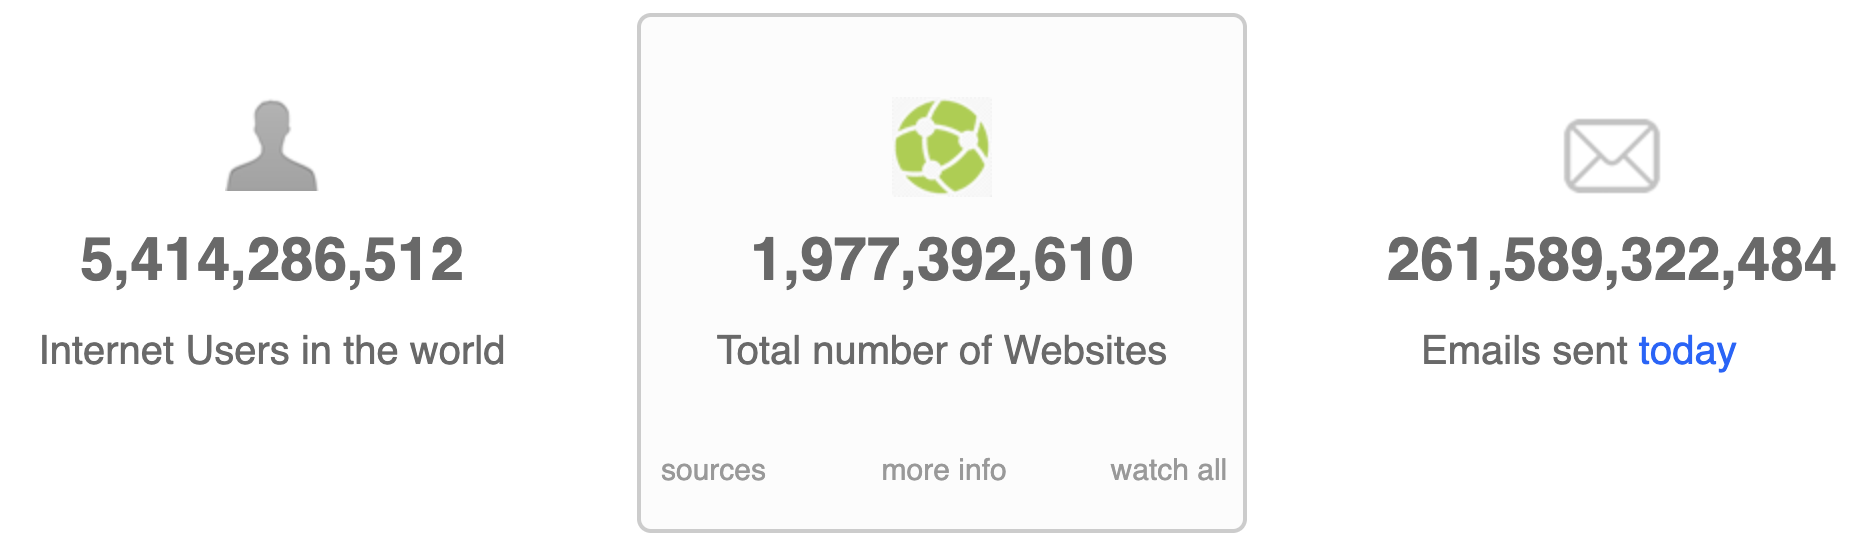 Number of websites growing